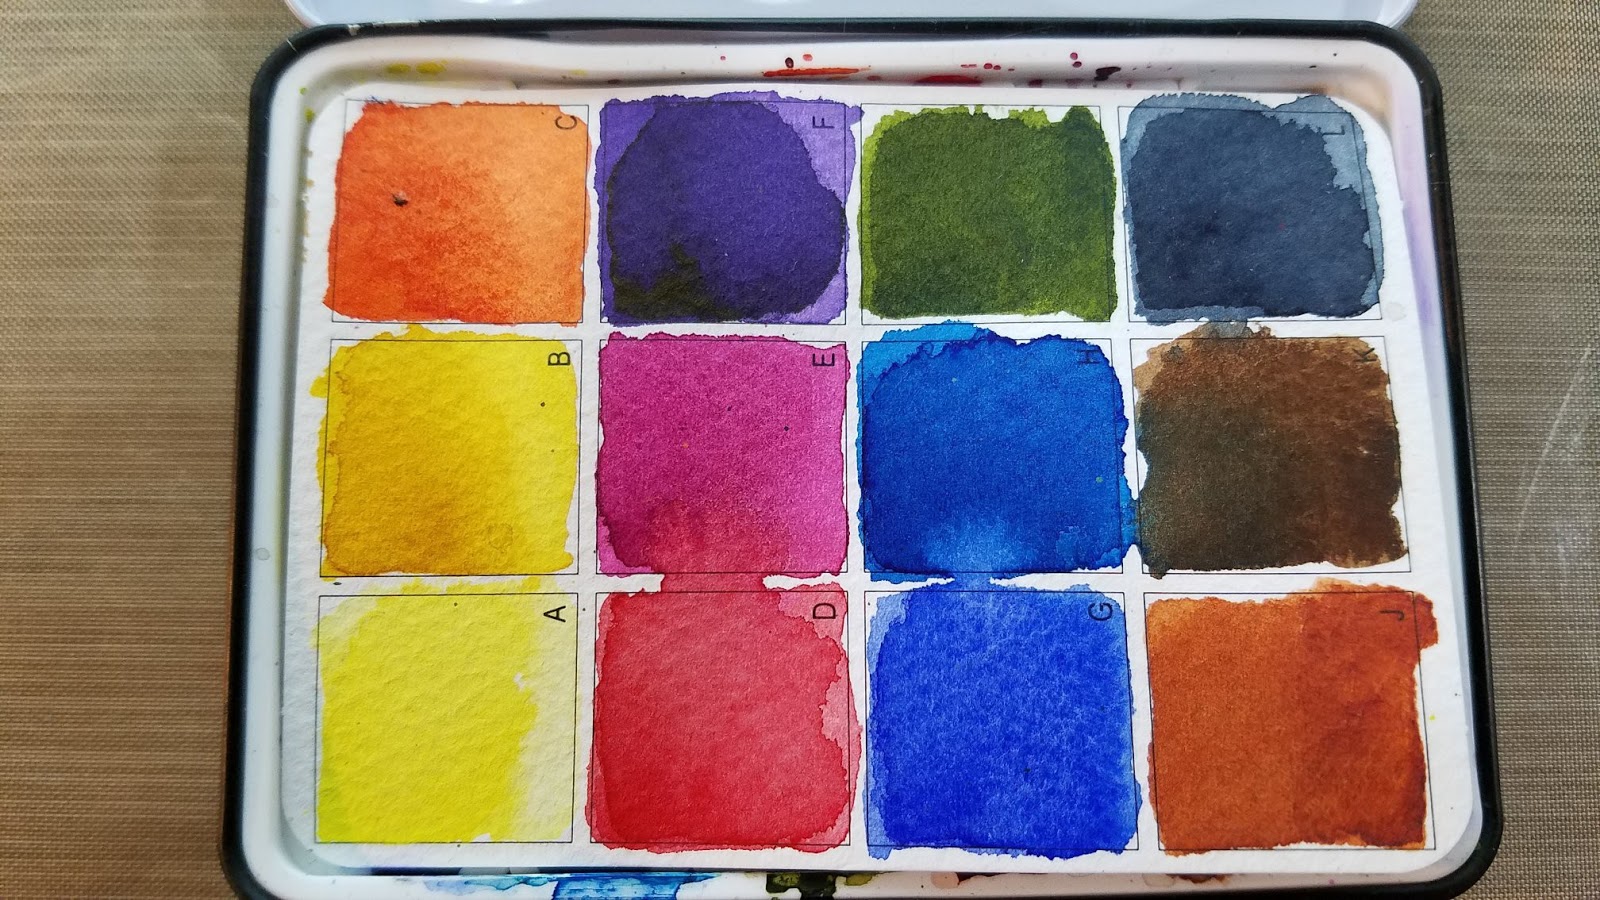 QoR Mini Watercolor 12-color Half-pan Set